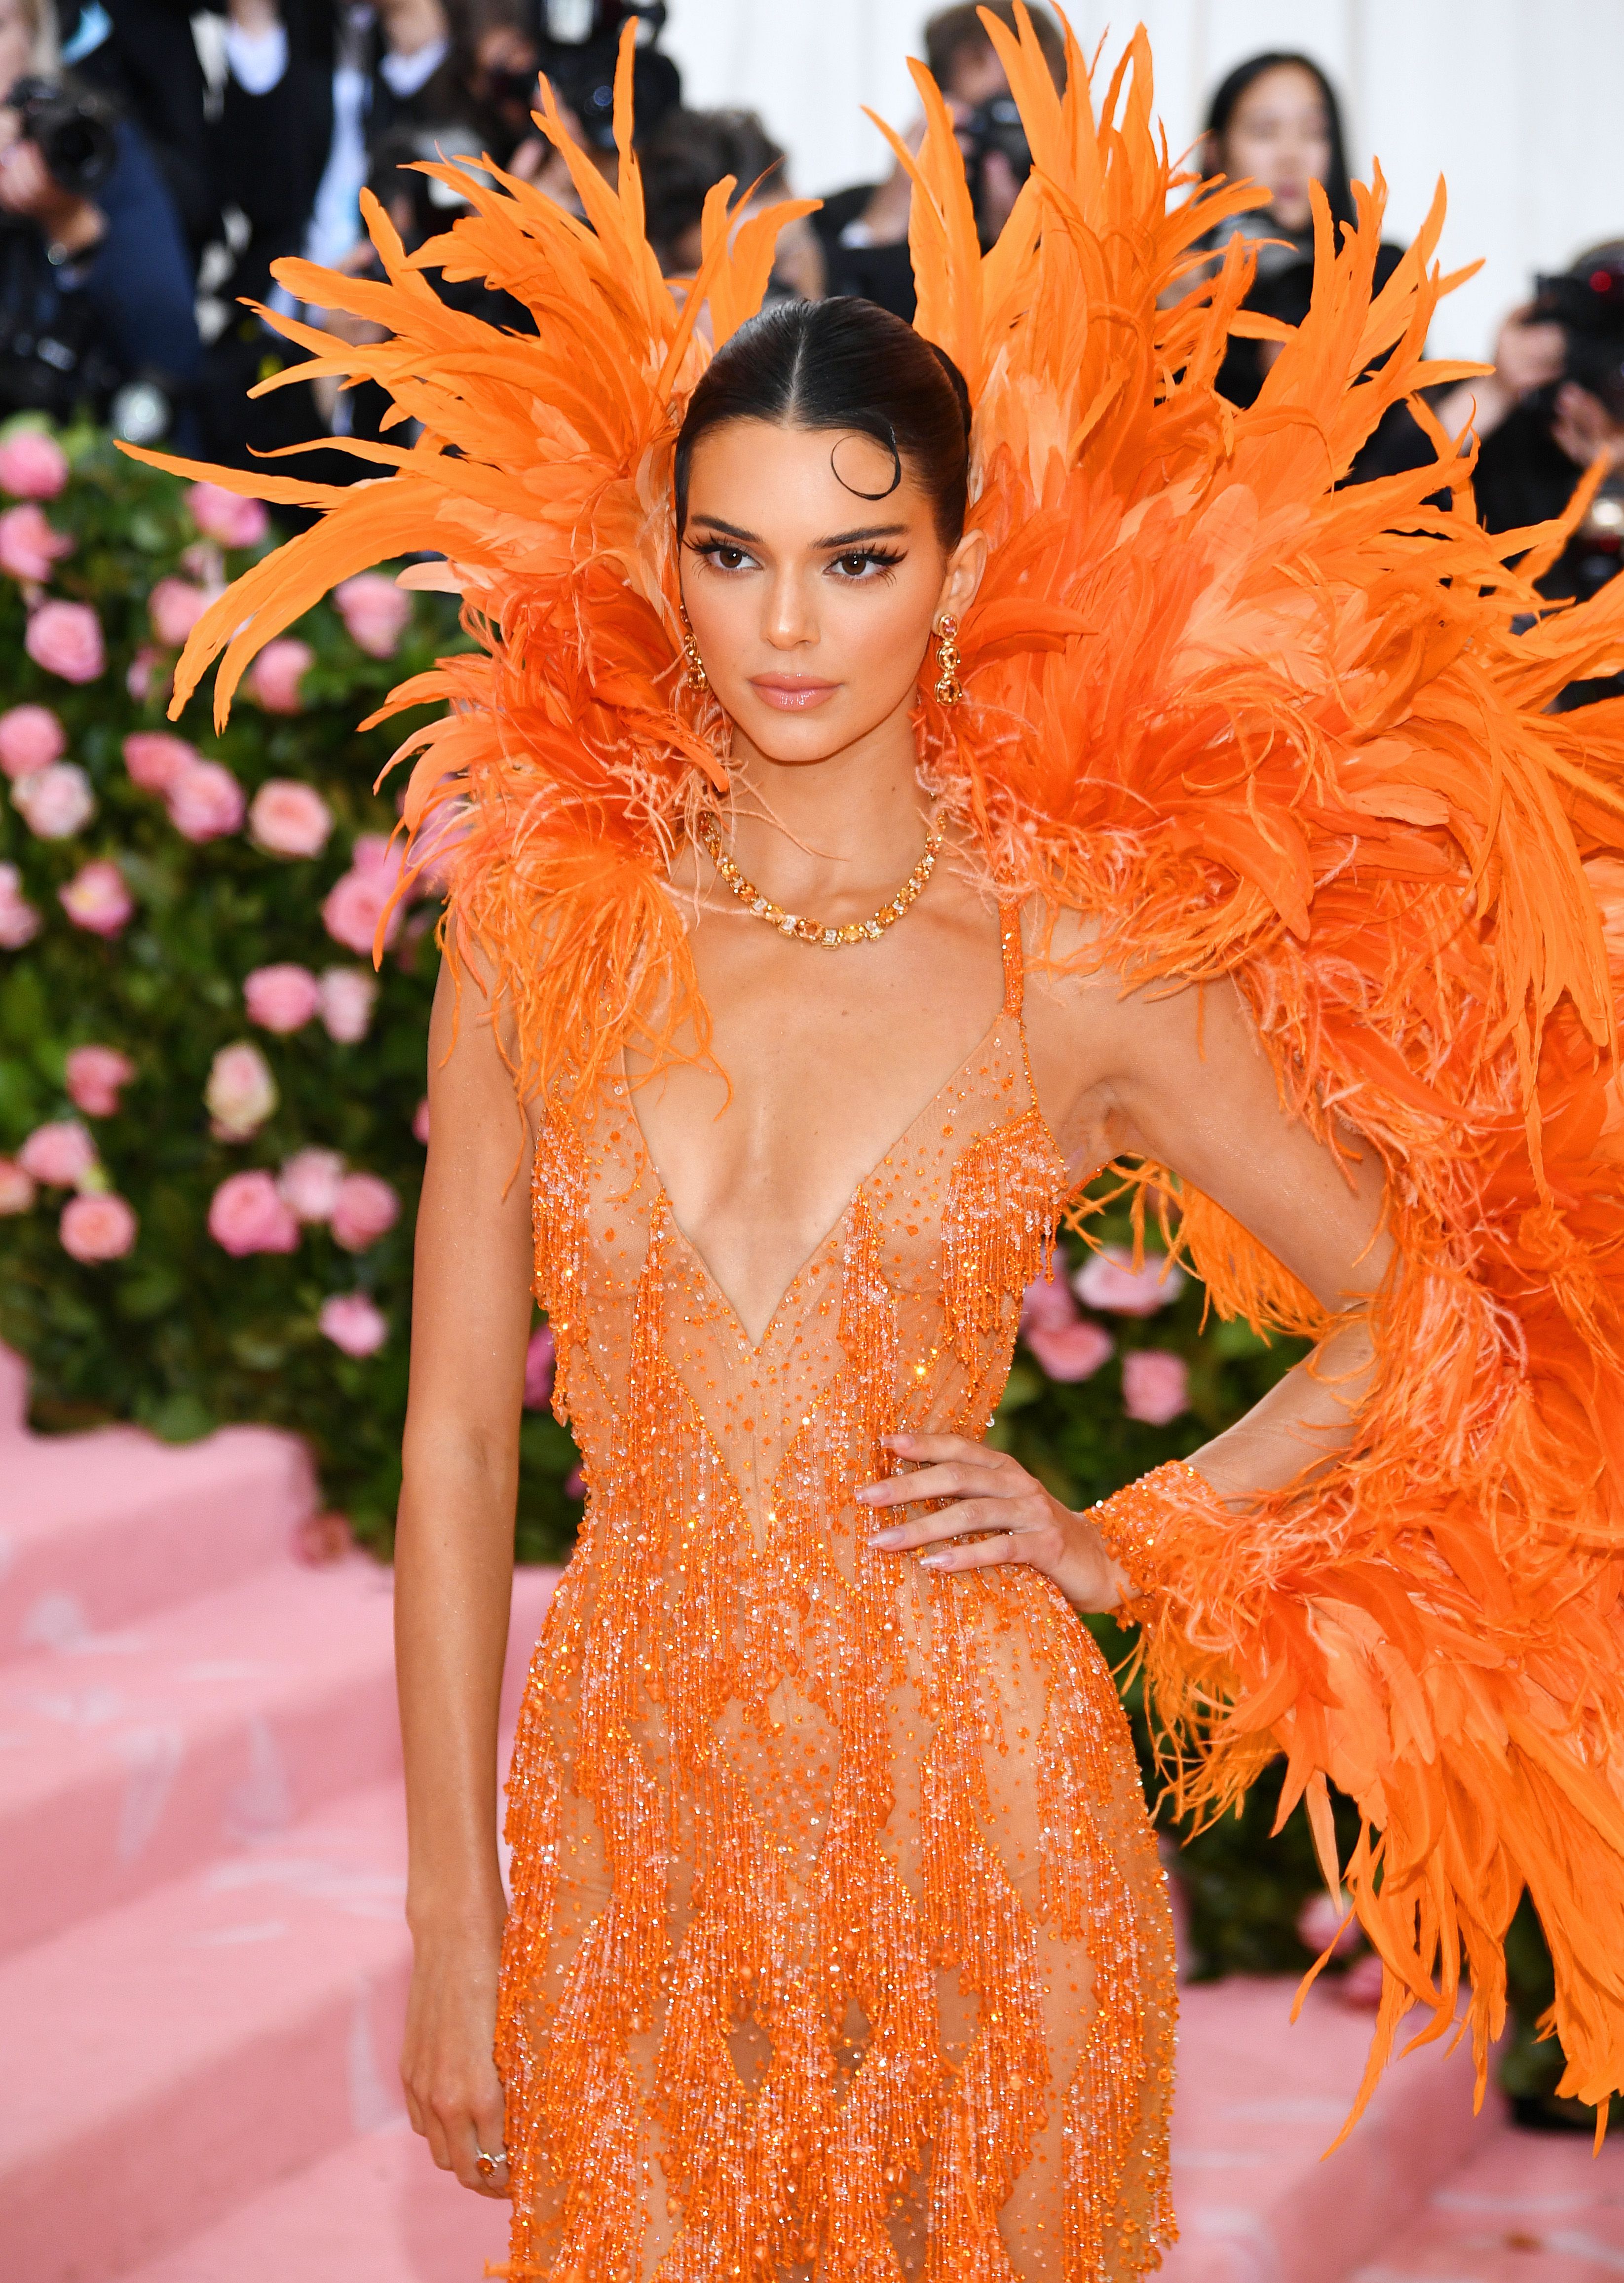 Kendall Jenner Wears Orange Feathered Dress To Met Gala 2019